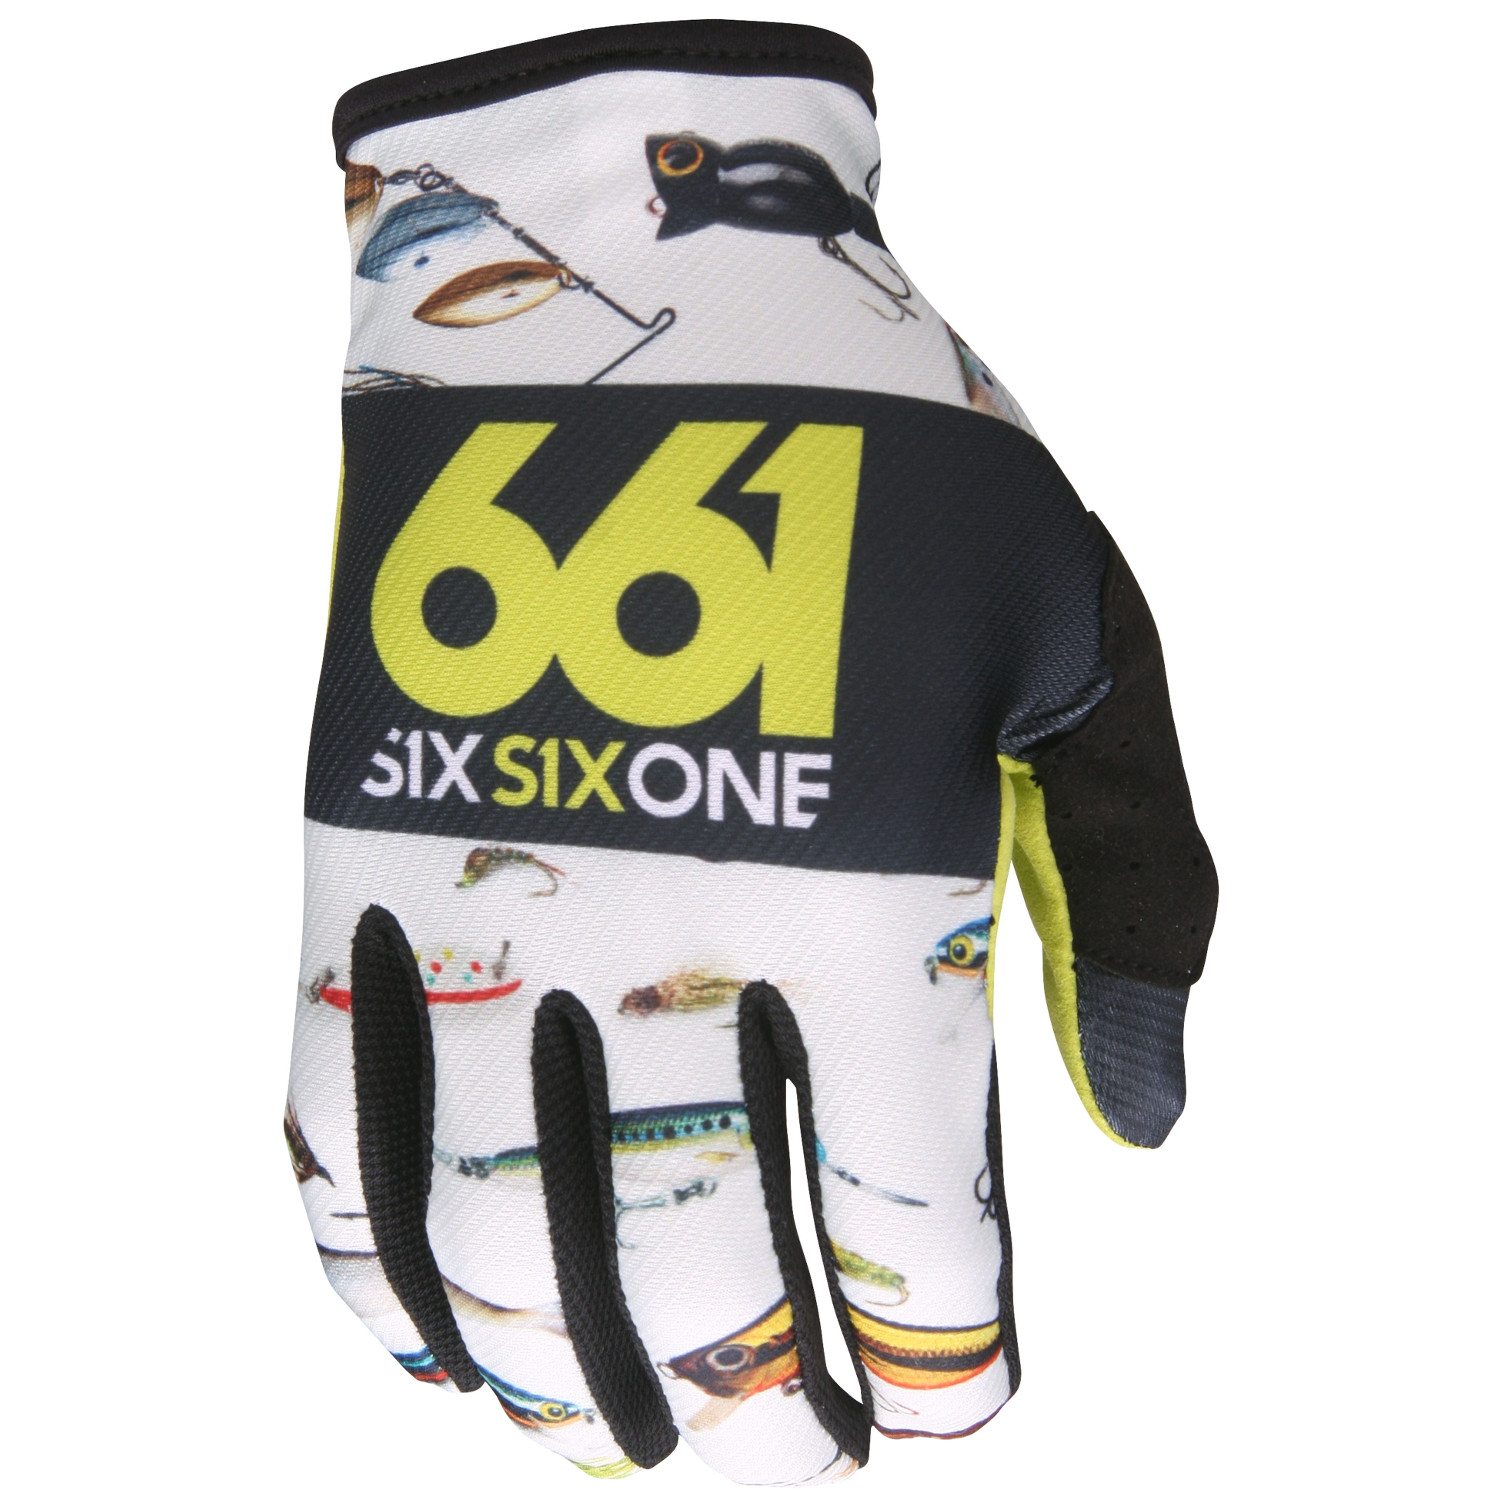 SixSixOne Gloves Comp Lure